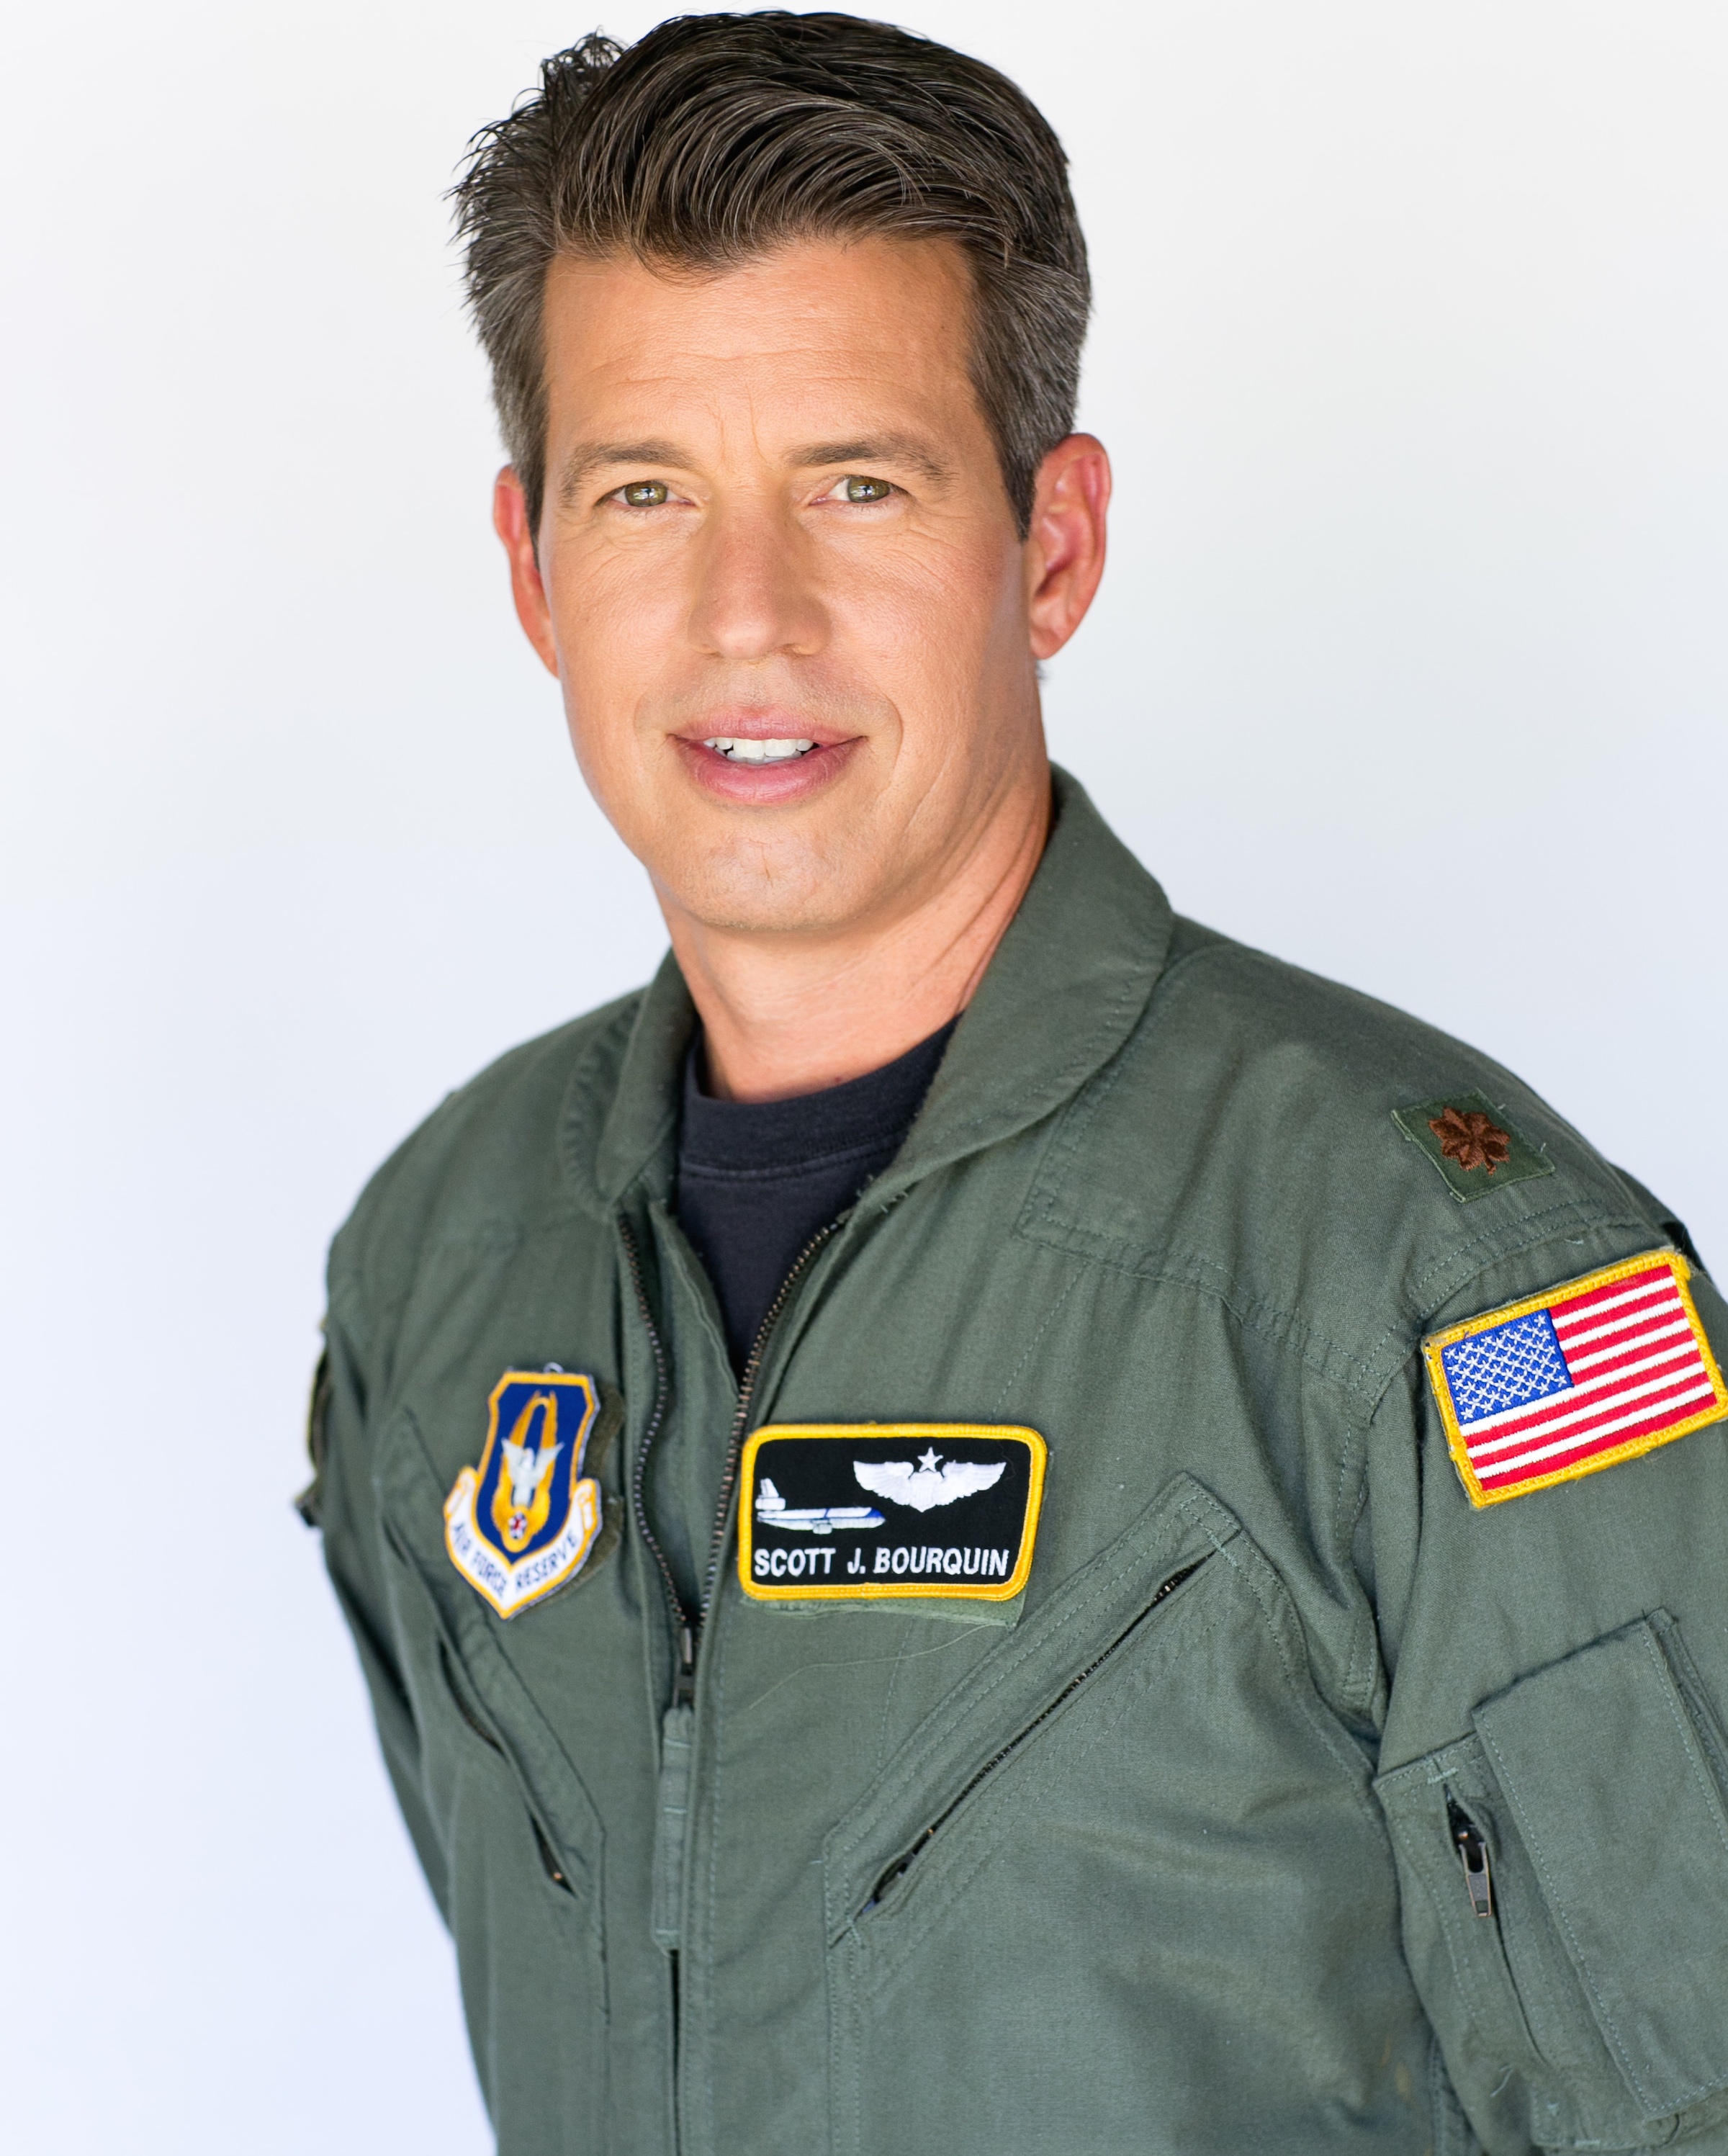 Scott Bourquin - Pilot USAF